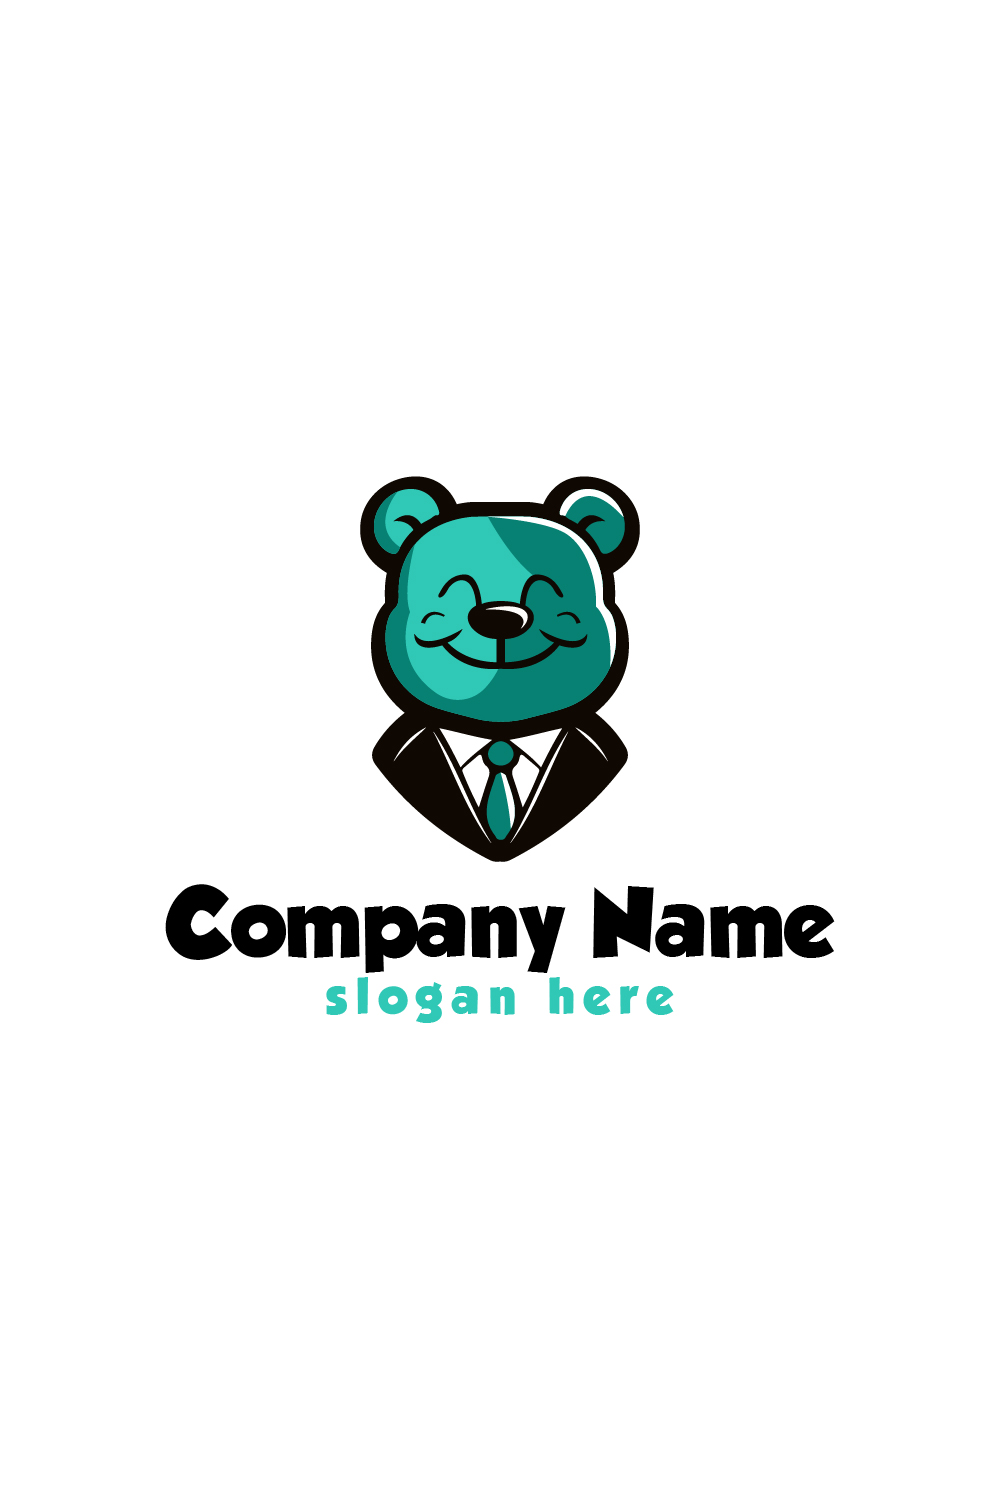 Cute Smiling Bear Mascot logo Template pinterest preview image.